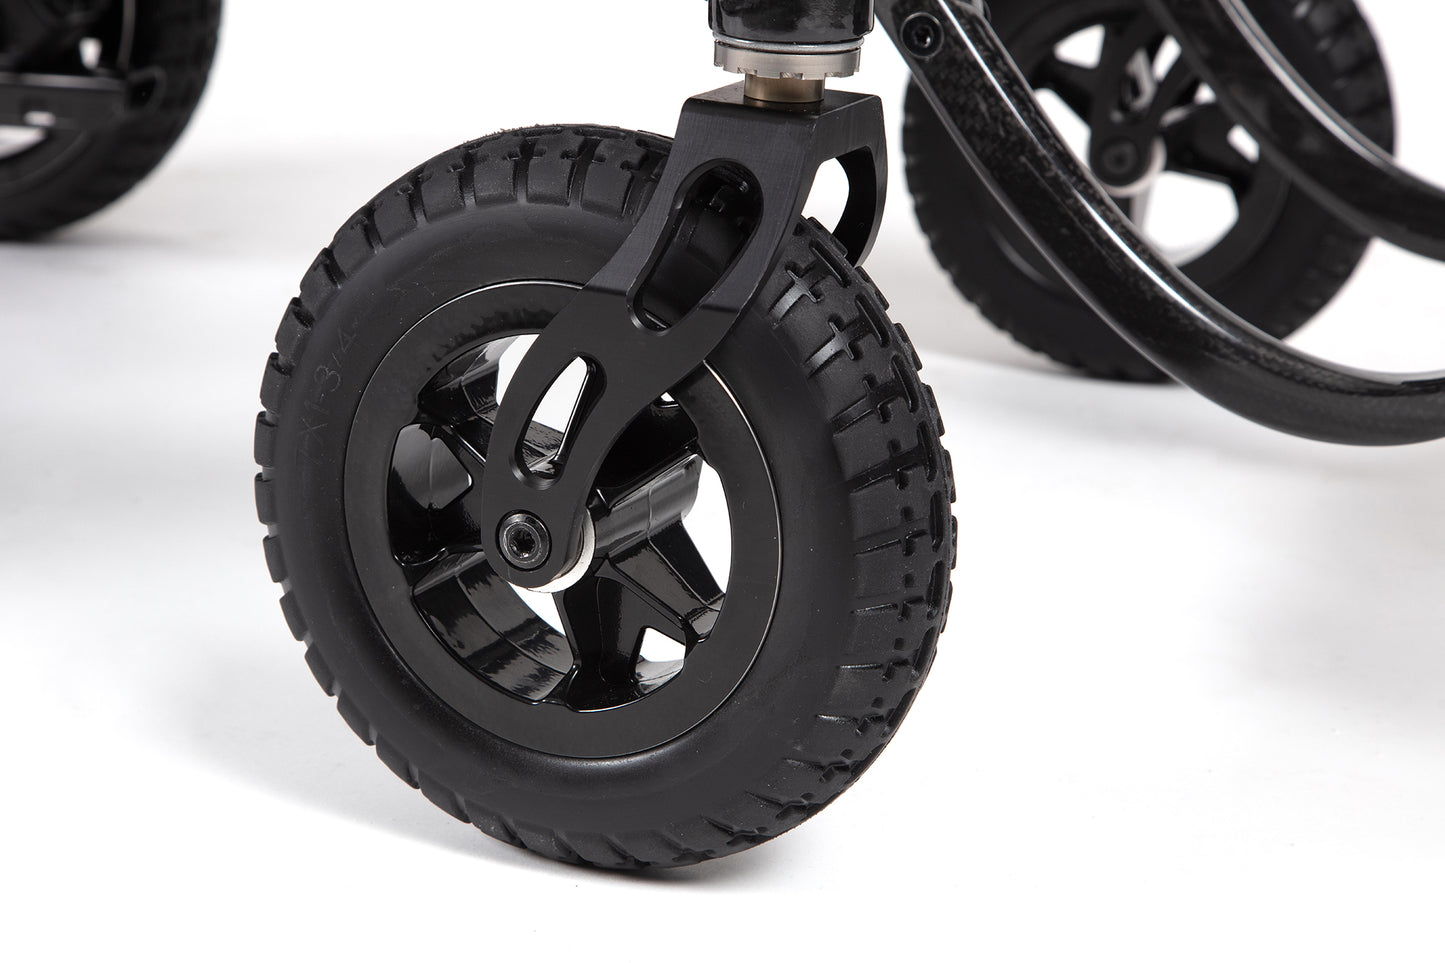 AirFold Powerchair Electric Wheelchair – Innovative & Stylish